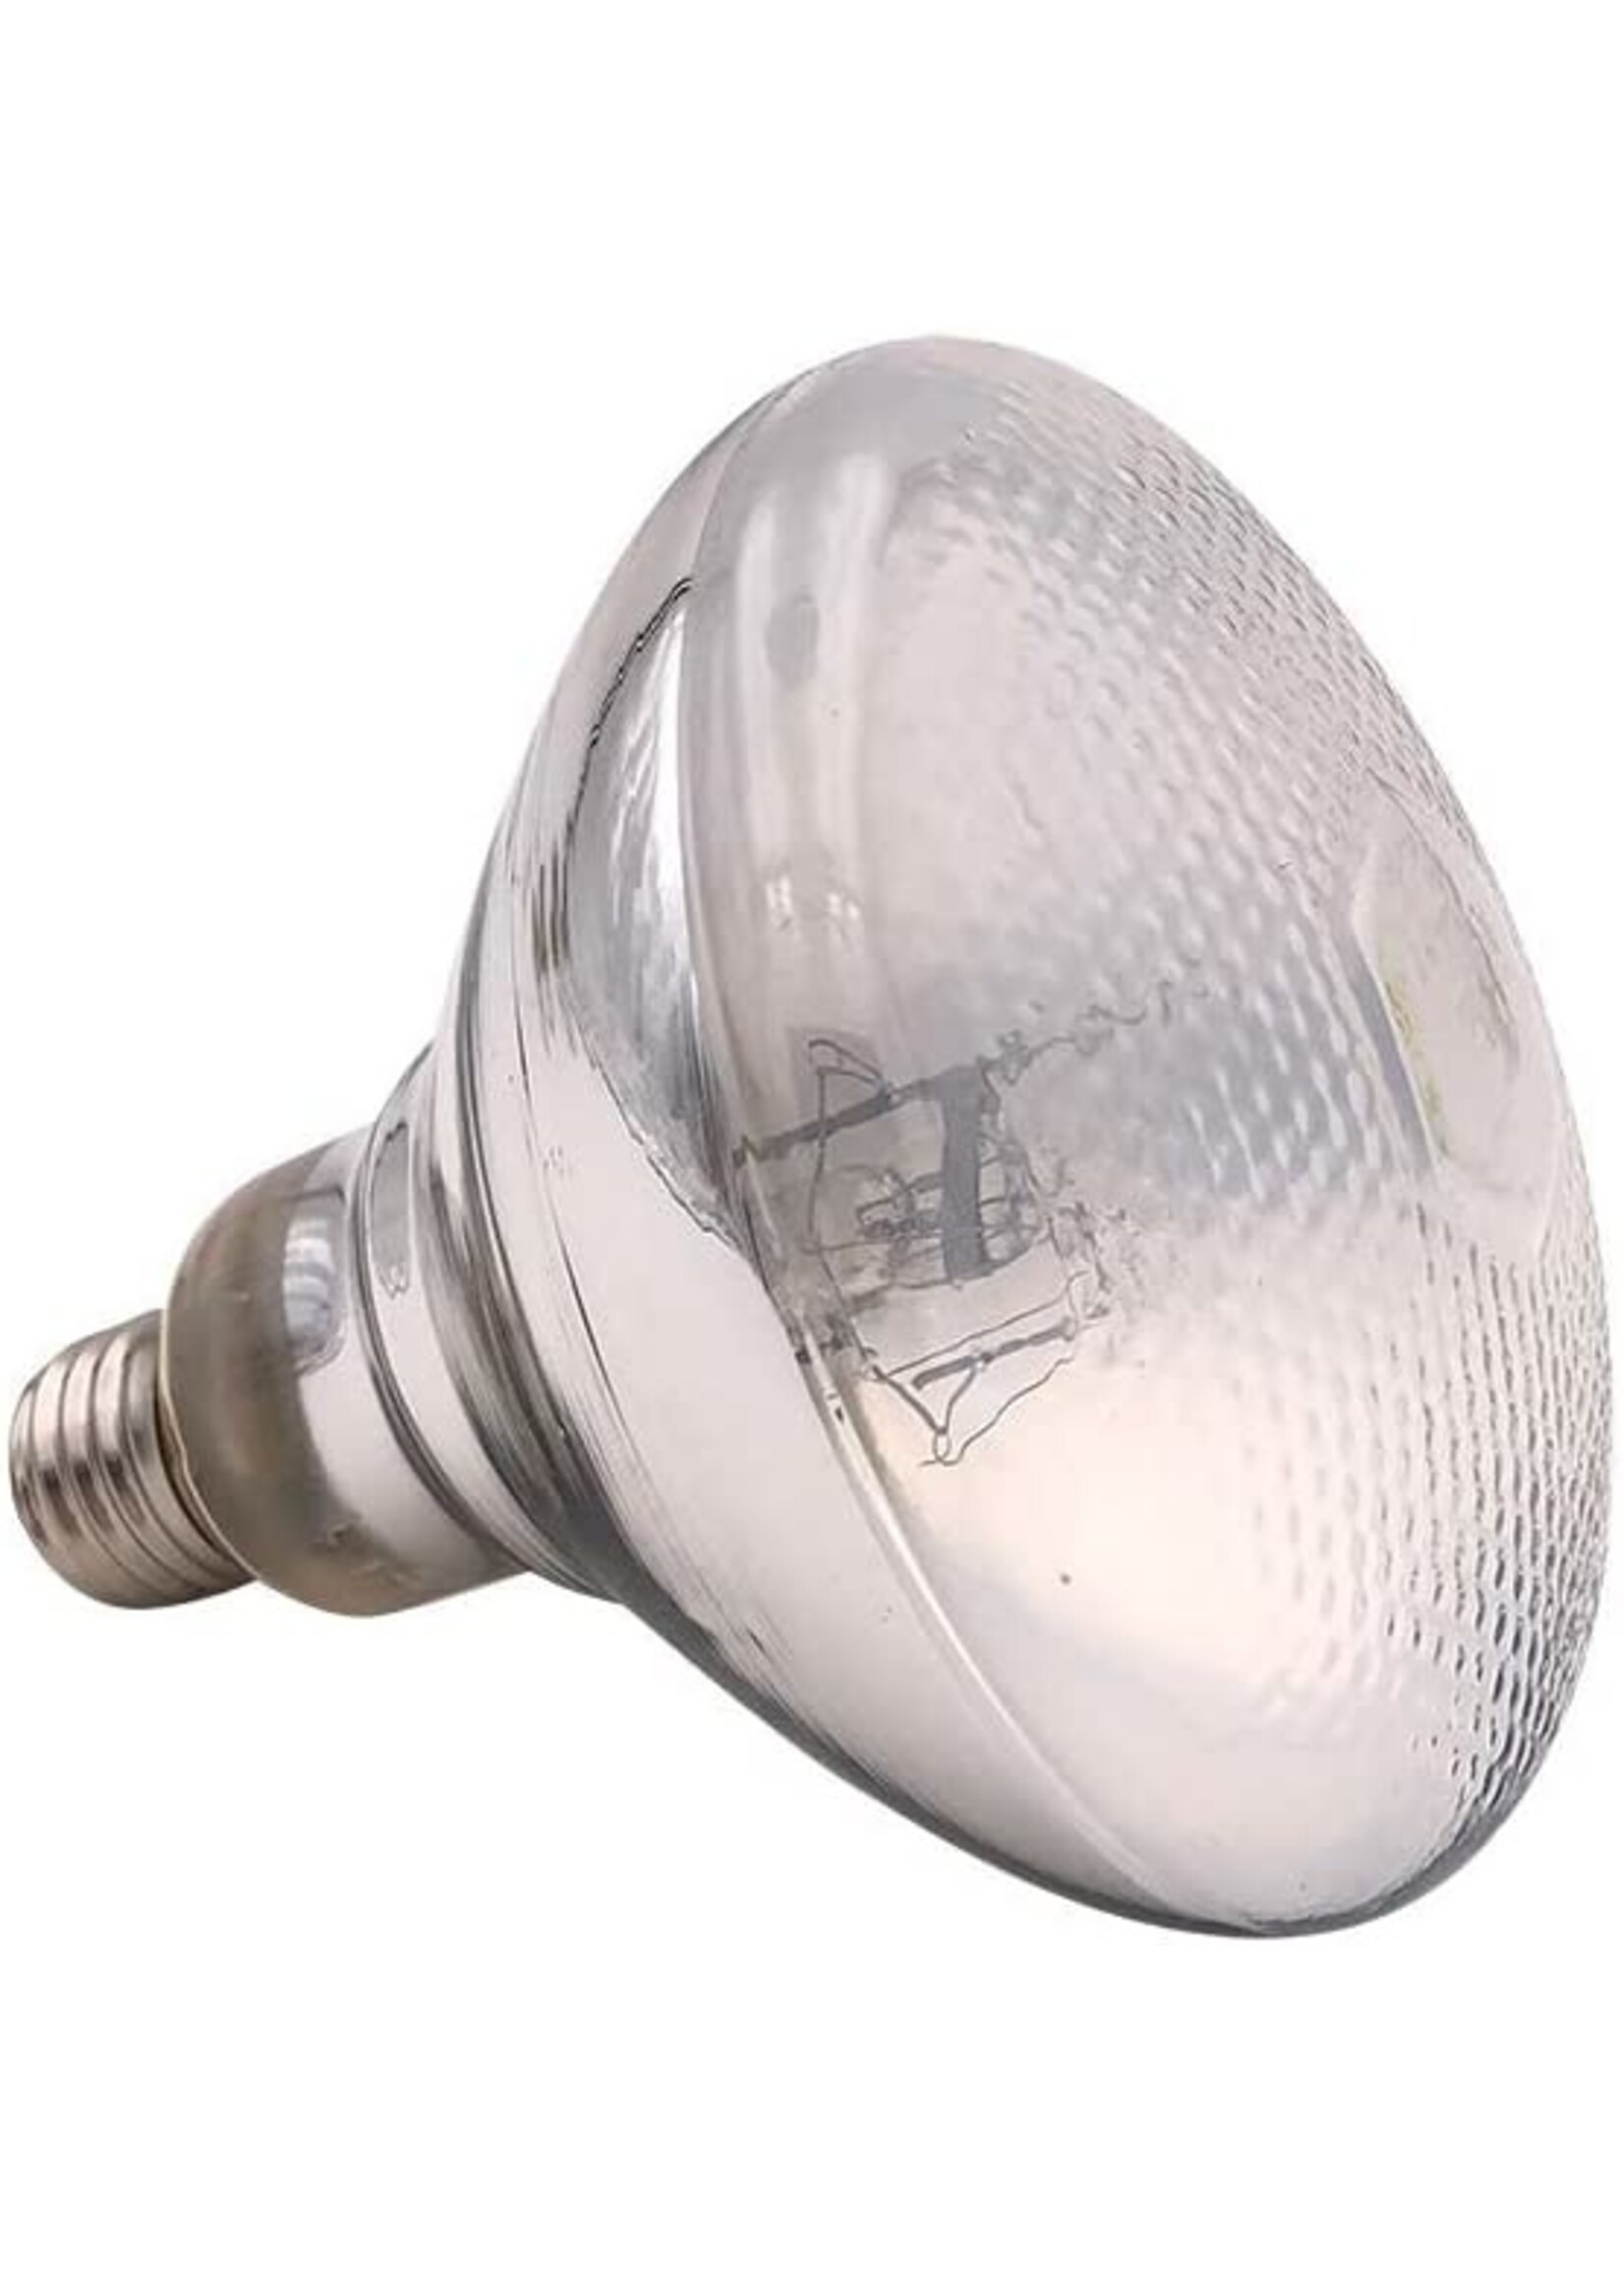 Mega-Ray Mercury Vapour Lamp UV Output